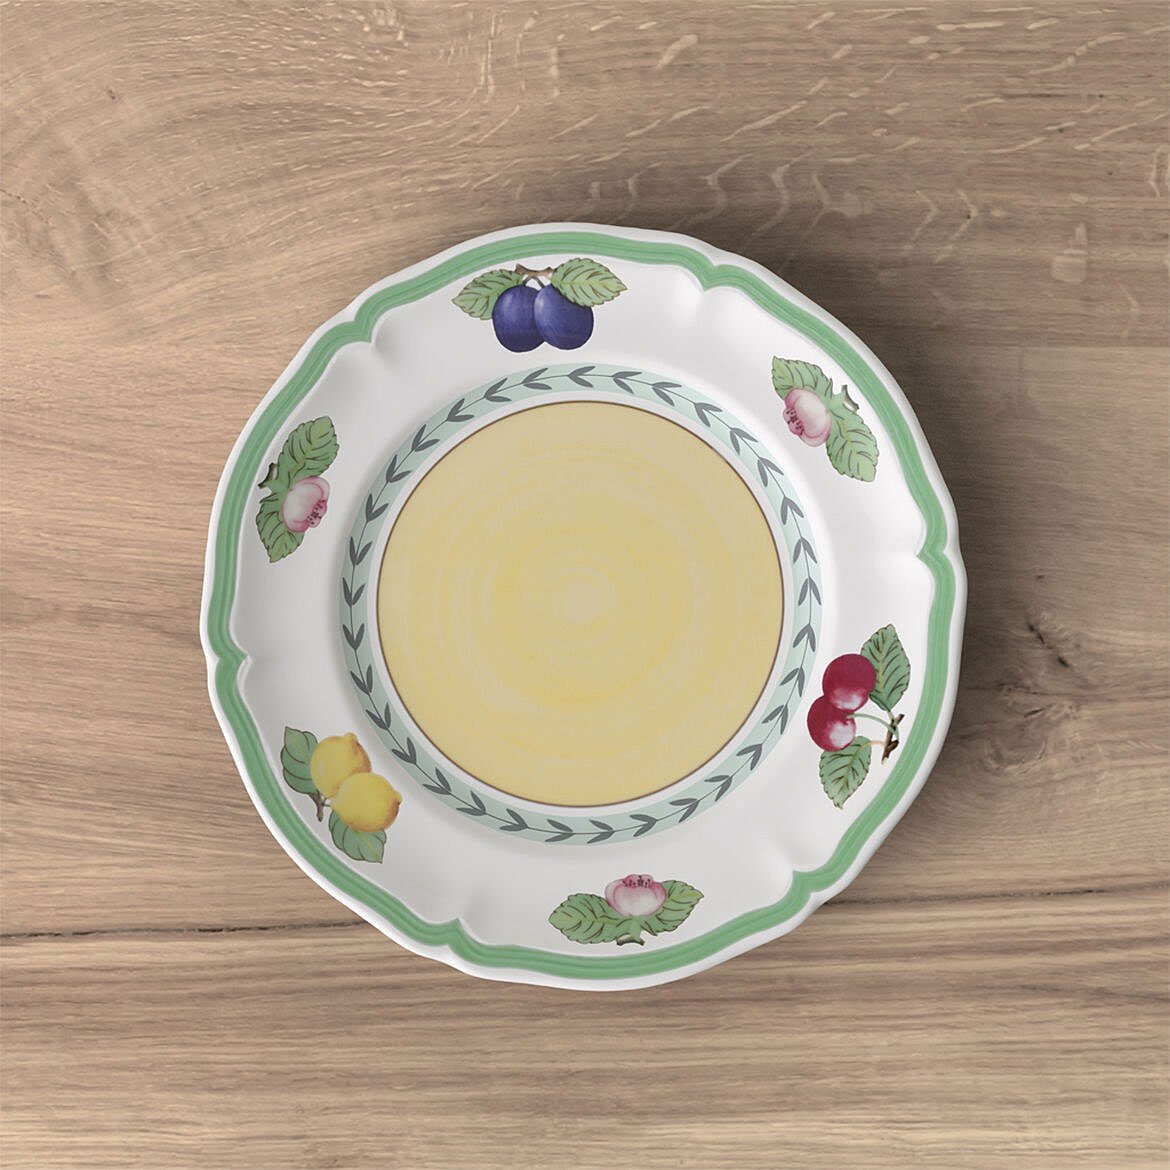 Пирожковая тарелка 17 см, French Garden Fleurence
https://spb.v-b.ru
г.Санкт-Петербург
eshop@v-b.spb.ru
+7(812)3801977